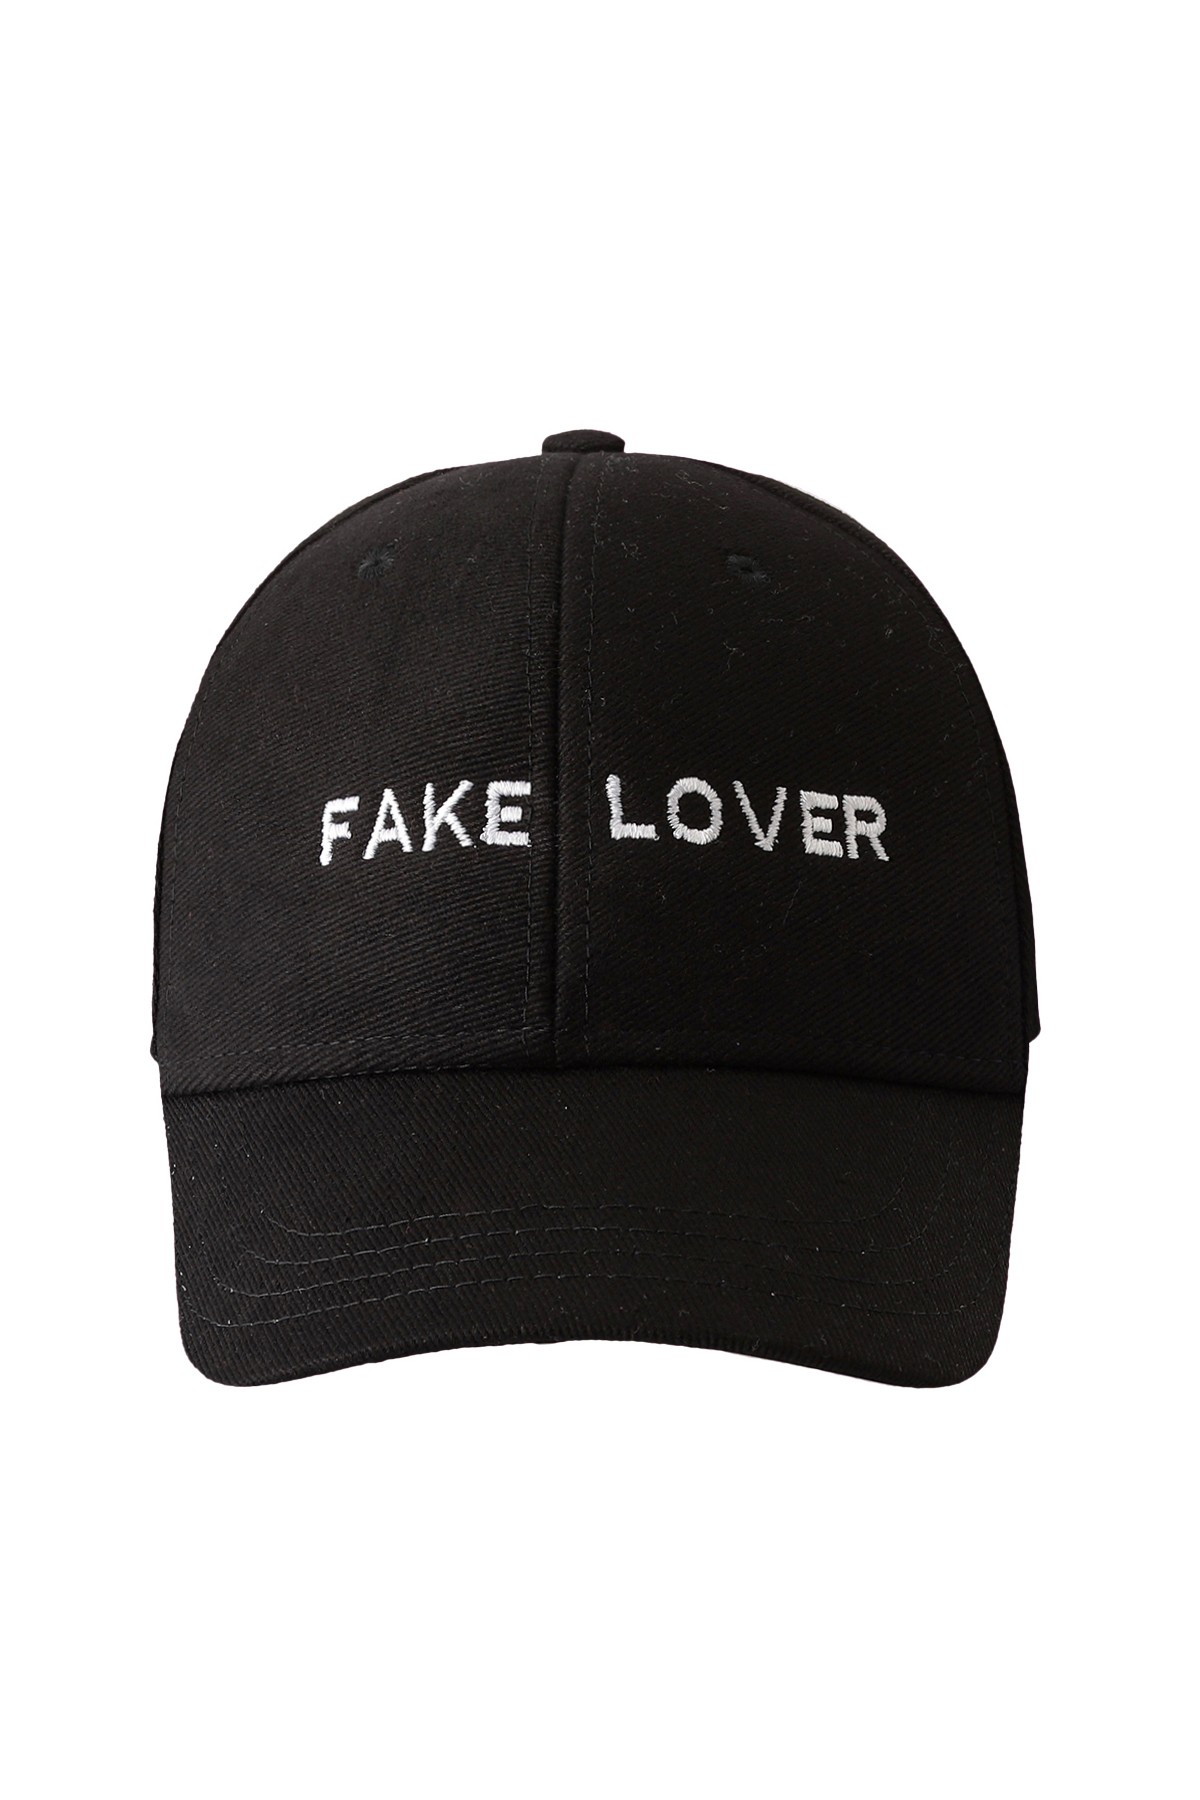 FAKE LOVER CAP